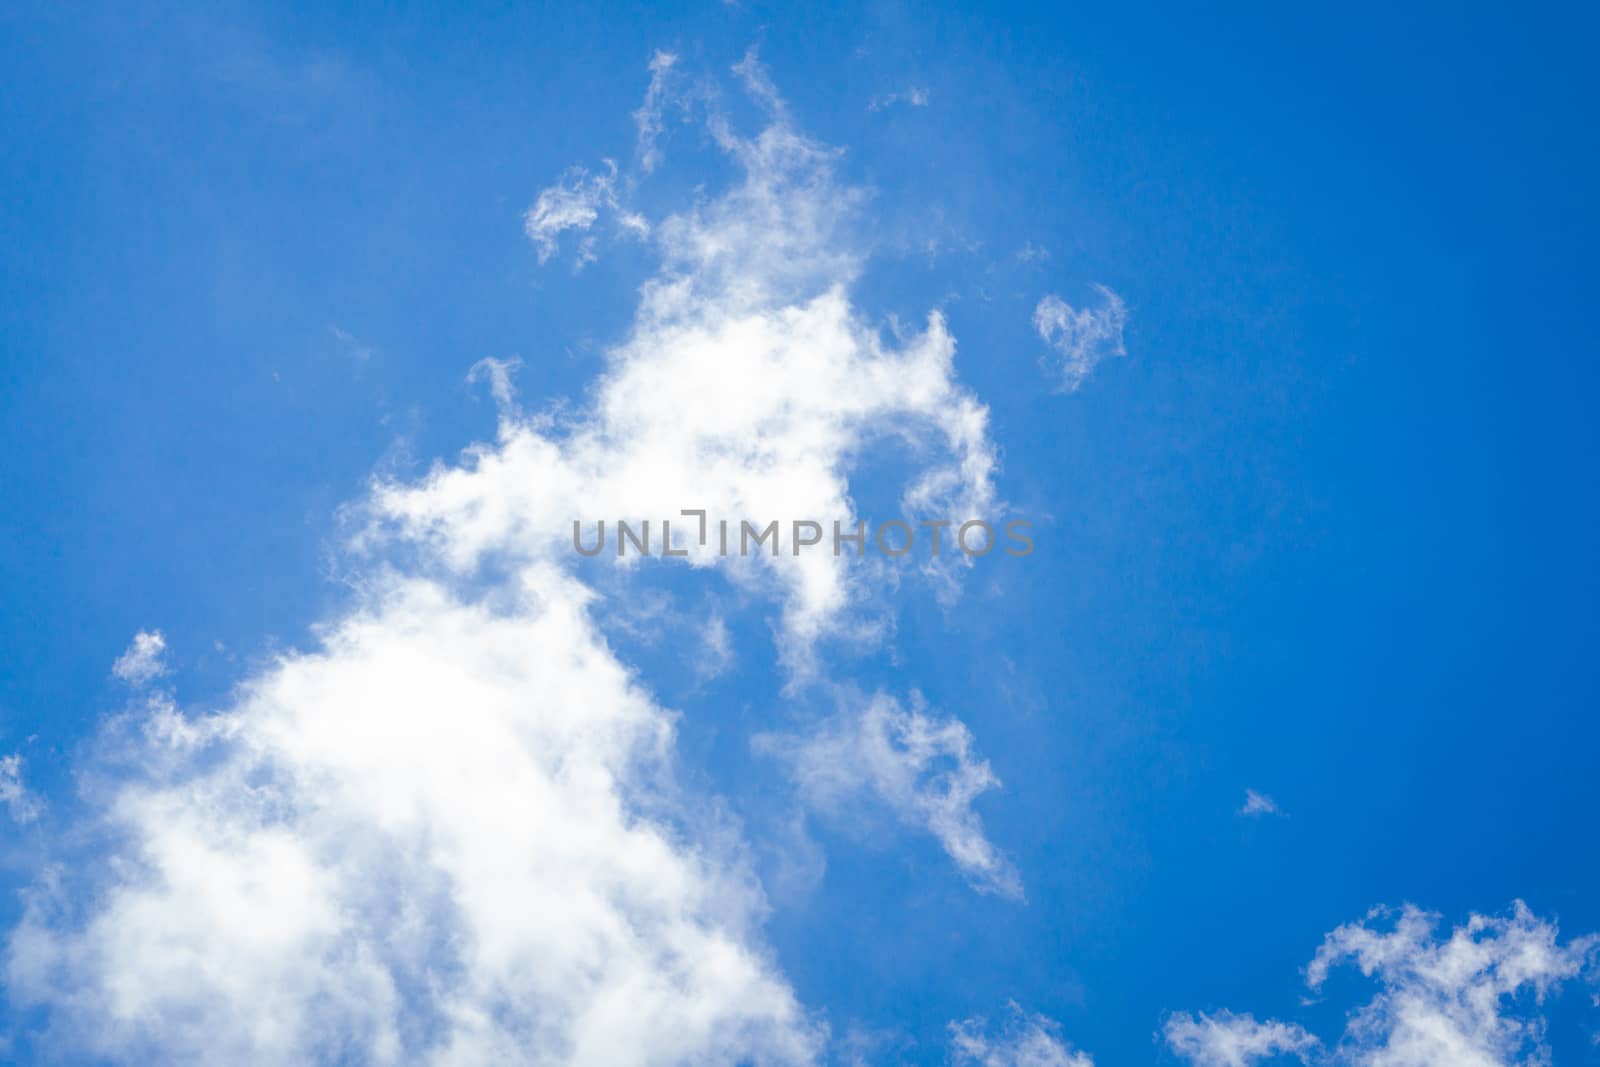 Blur clouds on the sky with sun light, nature by pt.pongsak@gmail.com